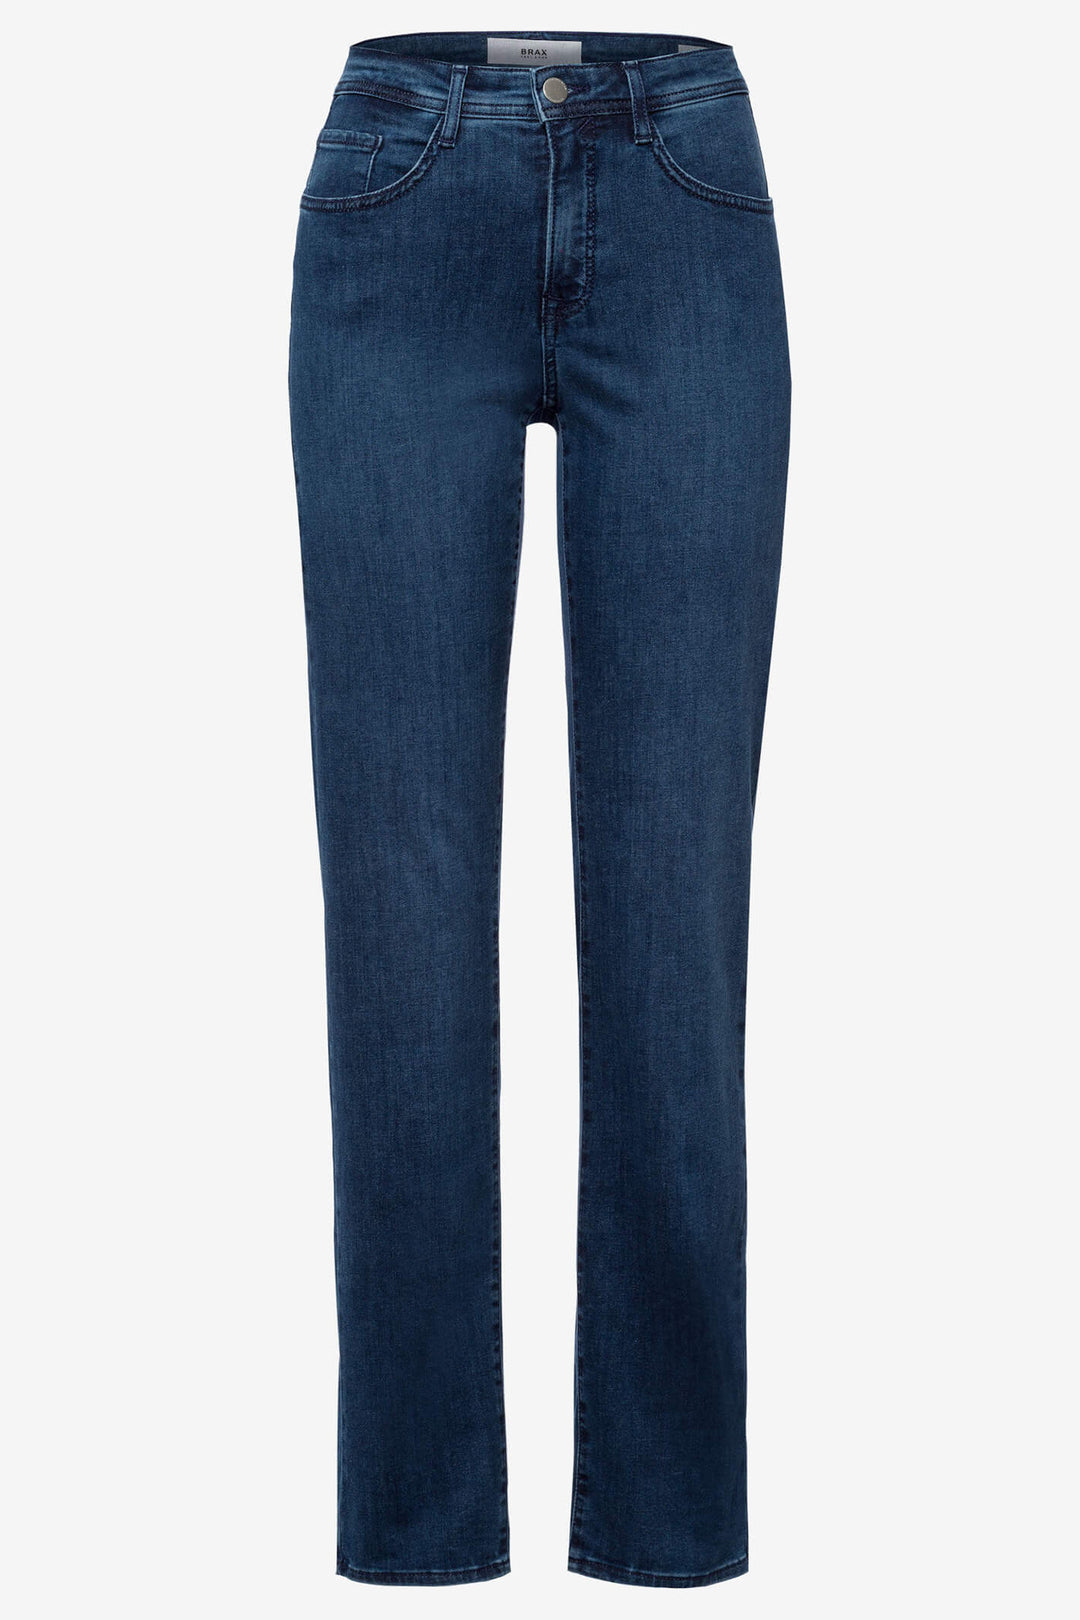 Brax Carola 70-7000 09928720 25 Used Regular Blue Jeans - Shirley Allum Boutique